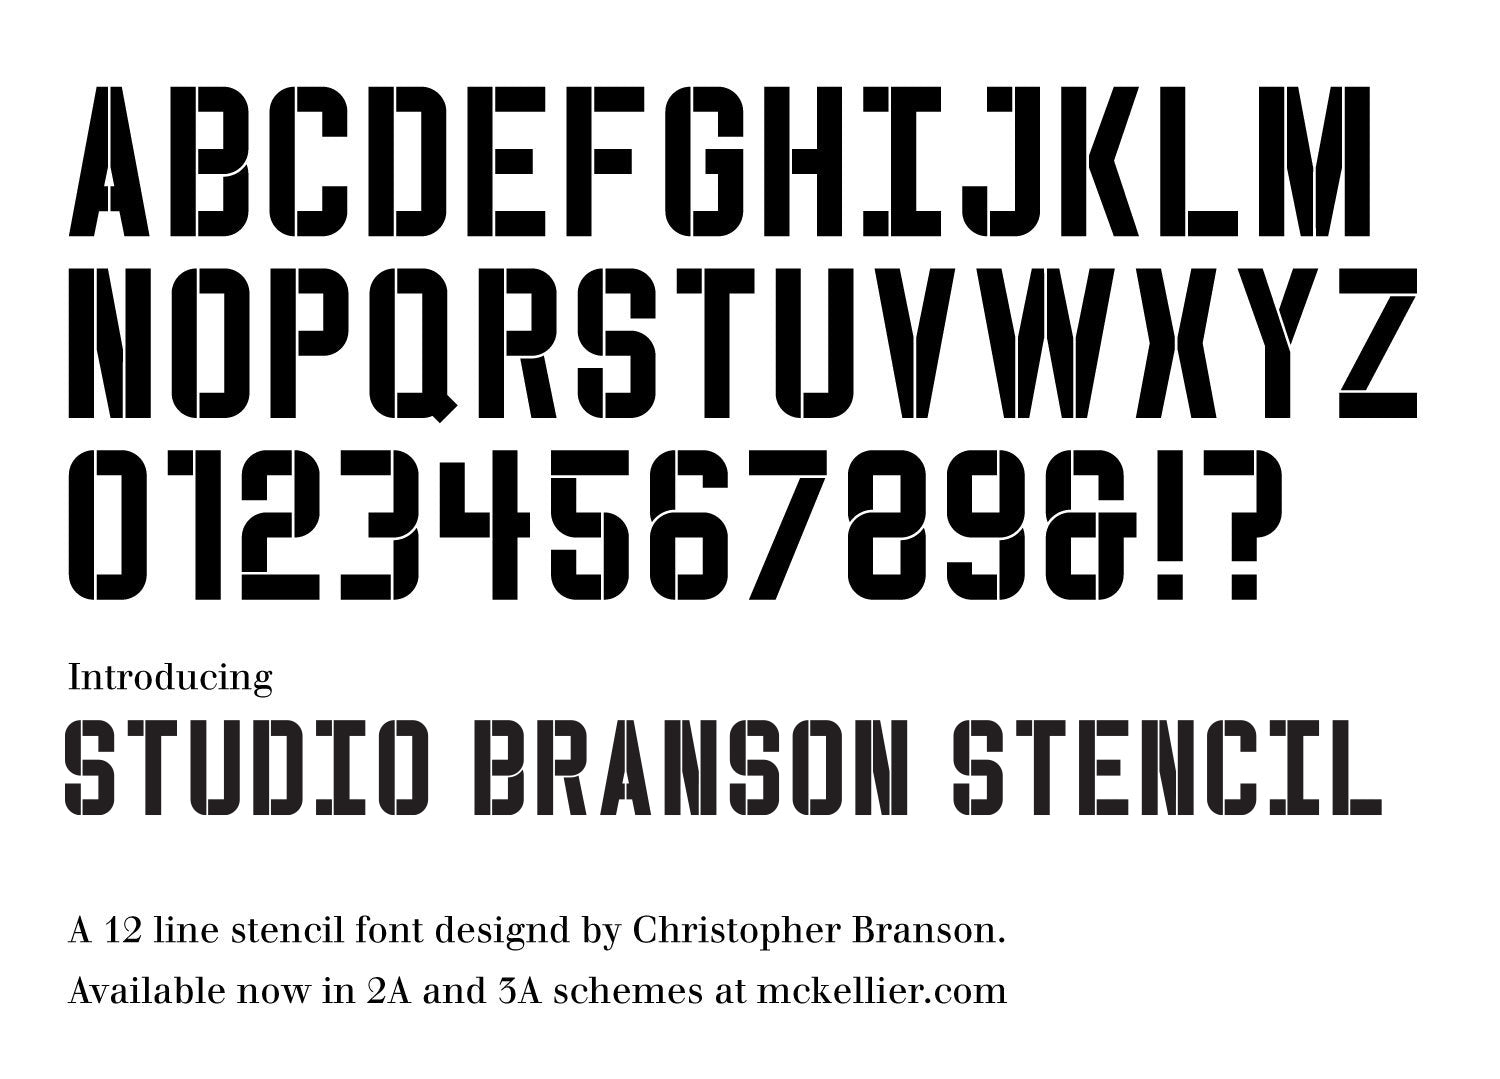 ‘Studio Branson Stencil’ Letterpress stencil woodtype typeface